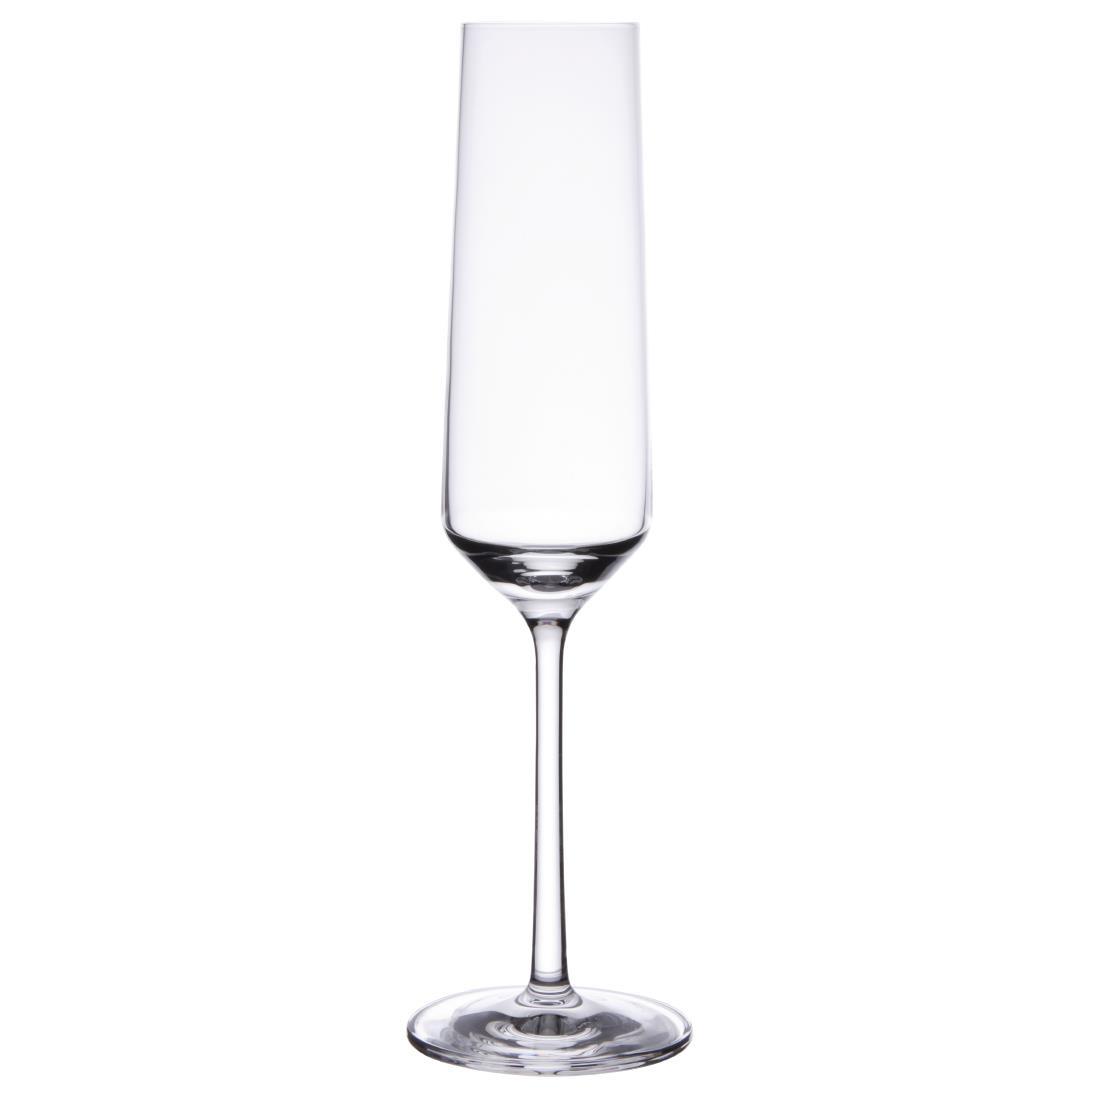 Schott Zwiesel Belfesta Crystal Champagne Flutes 215ml (Pack of 6) - GD903  - 1